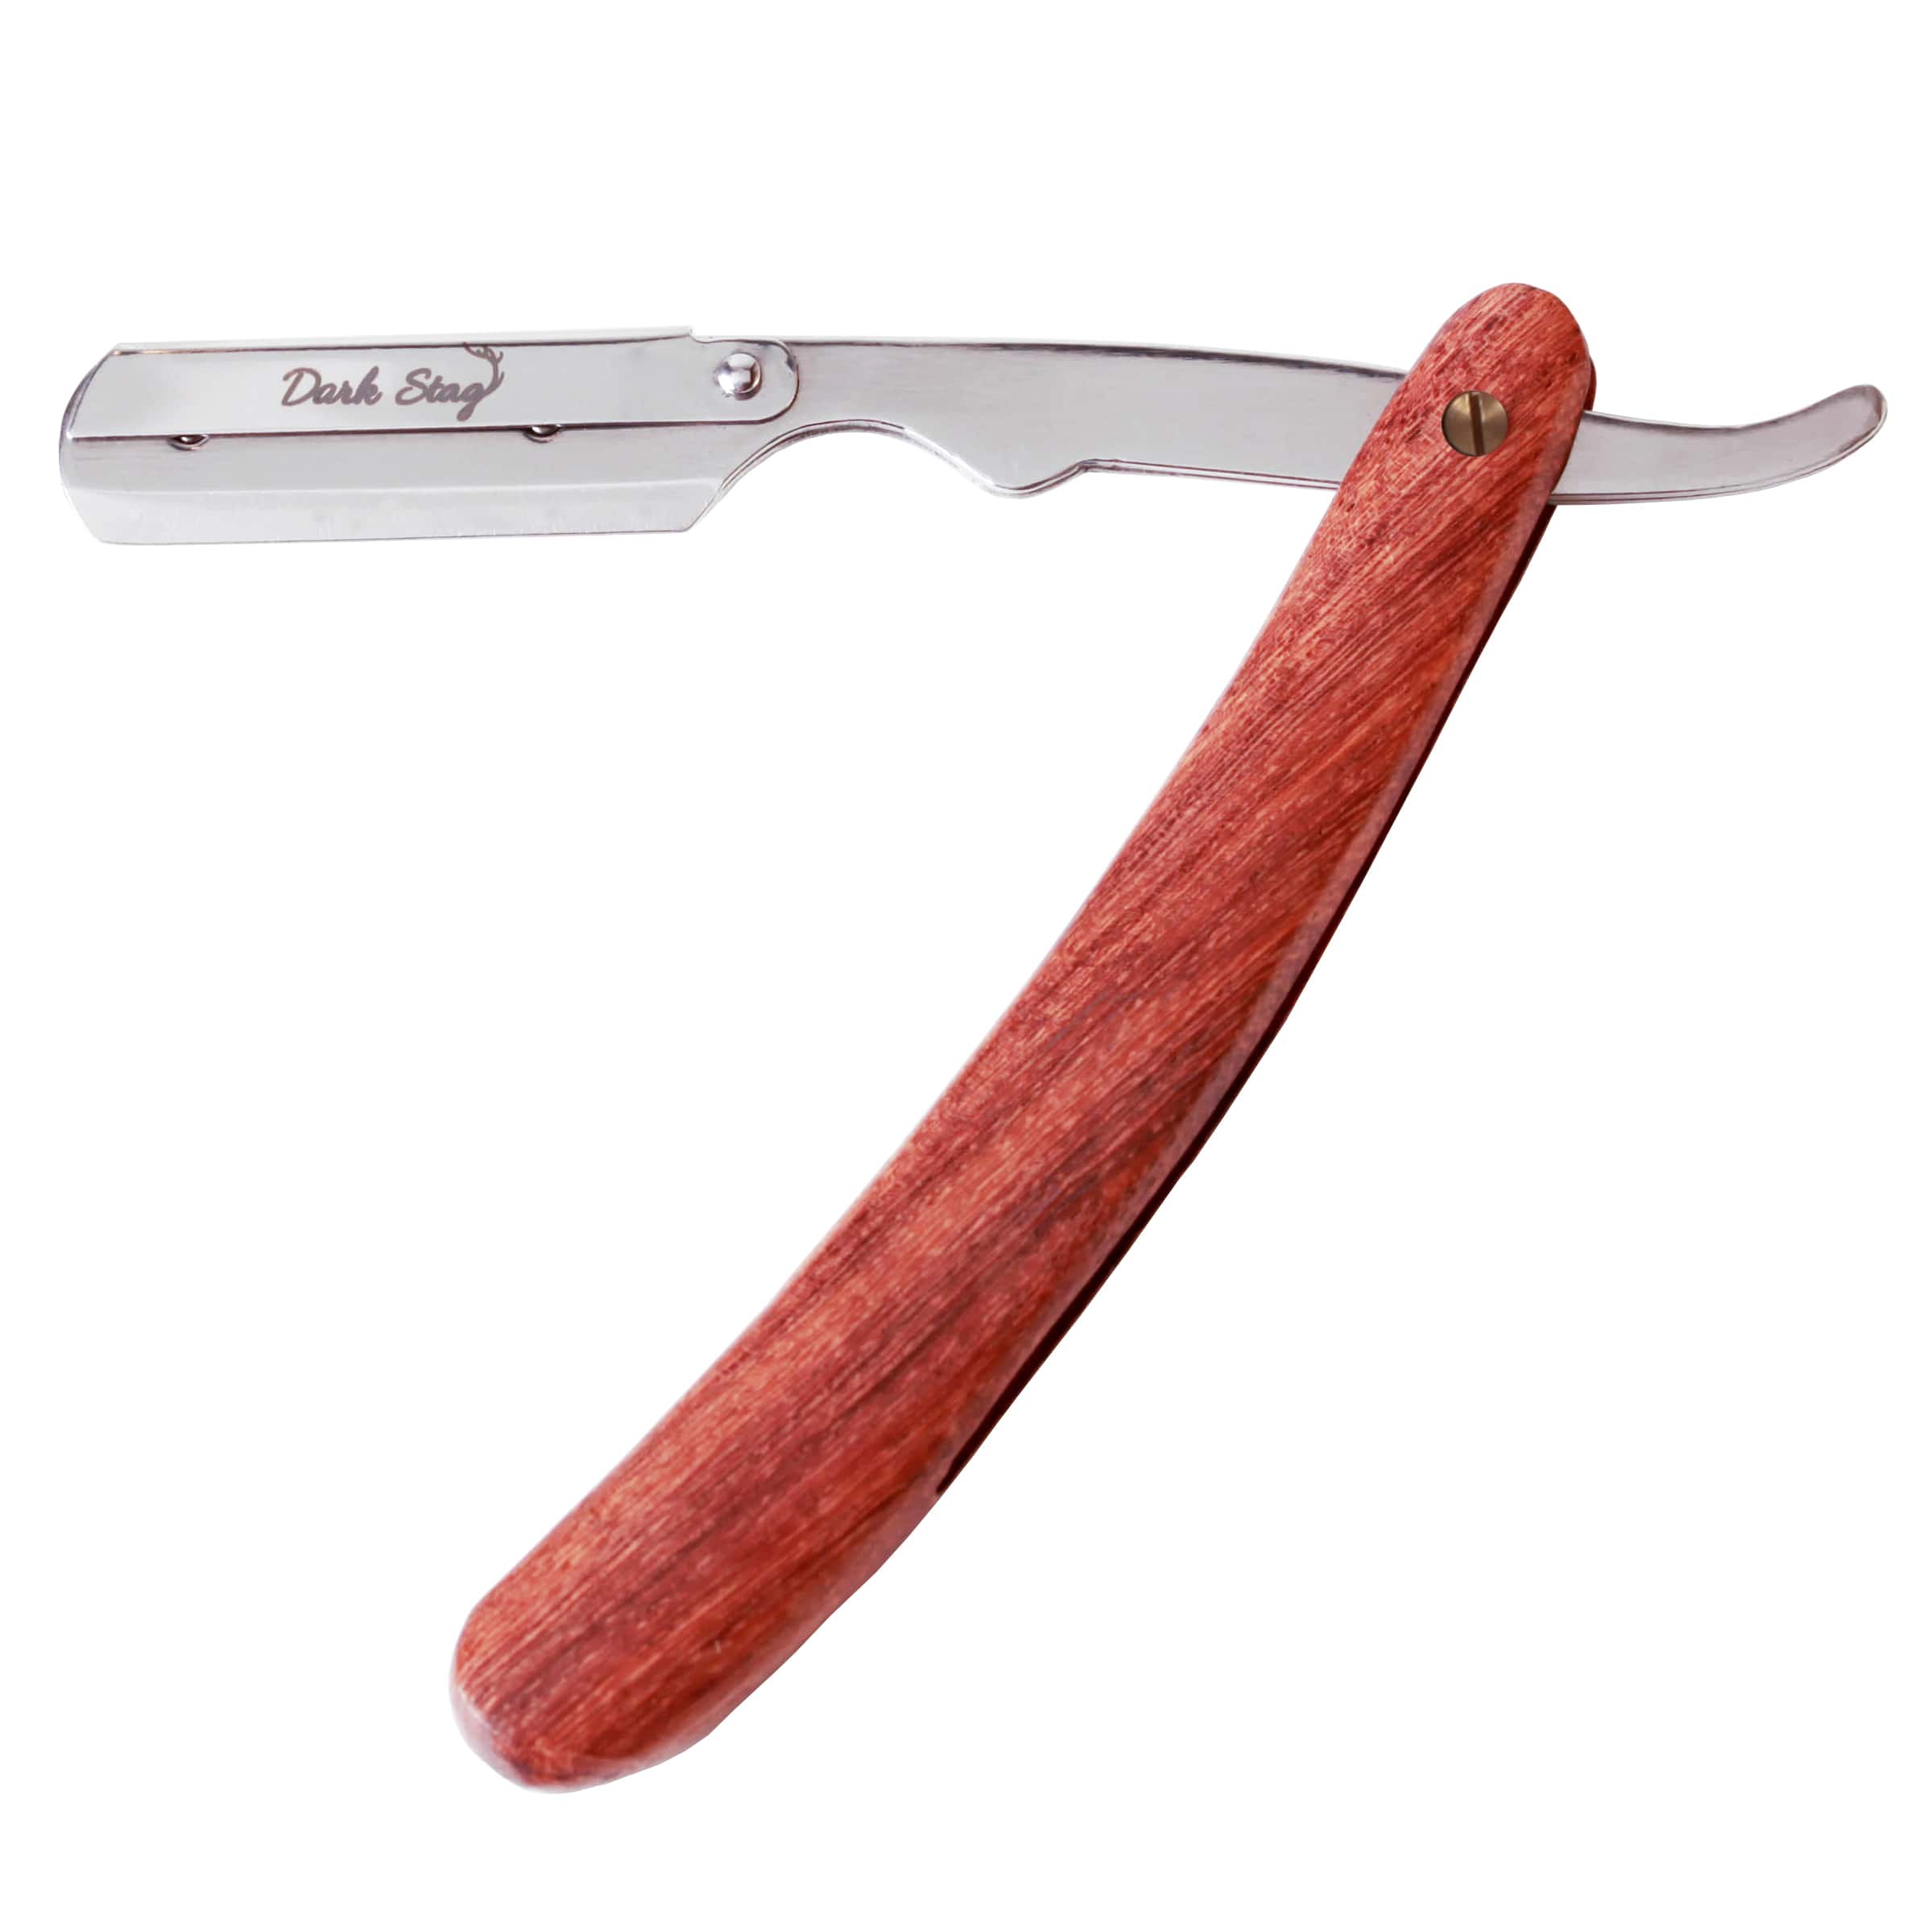 one blade straight razor